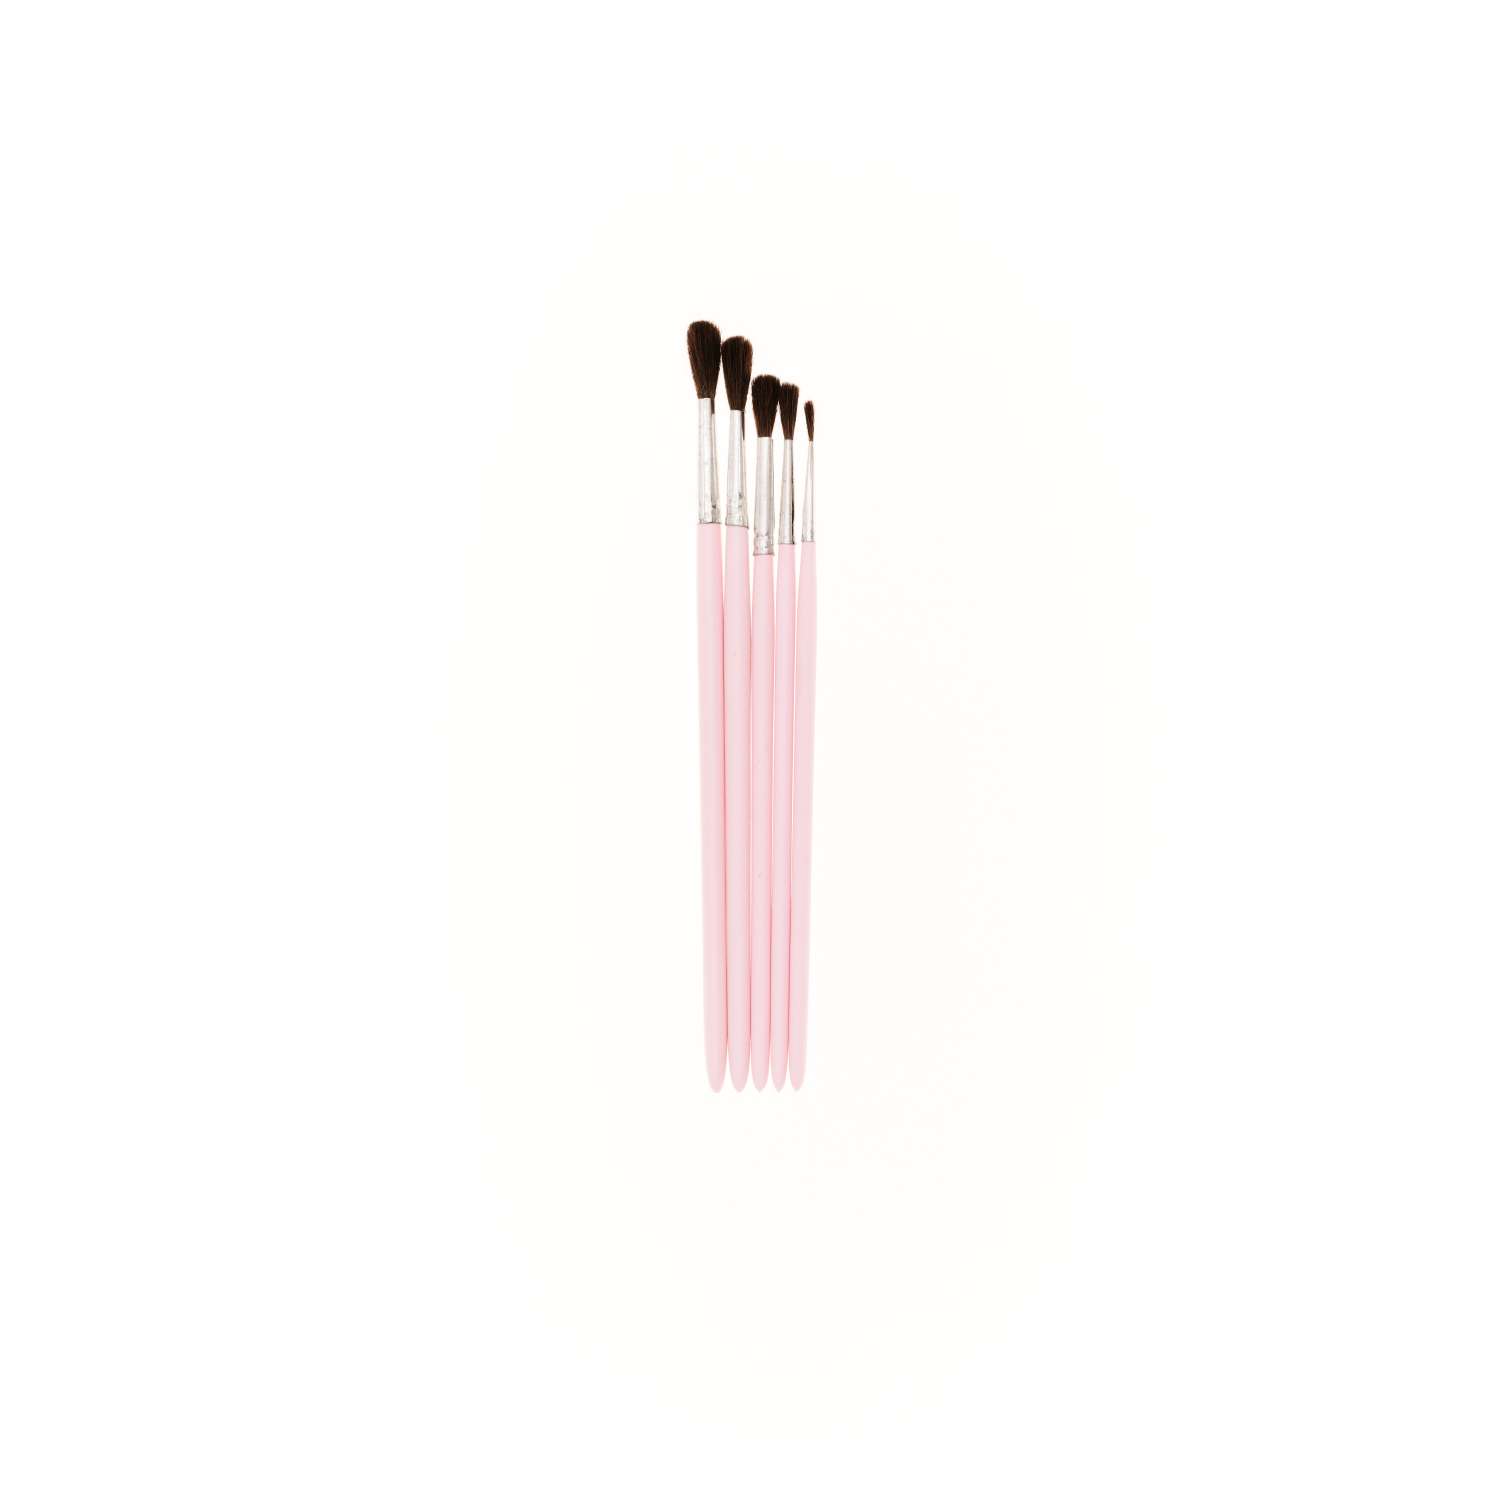 Кисти для рисования набор SwanAm Бабочки Пони № 1 2 3 4 5 цветная ручка - фото 2